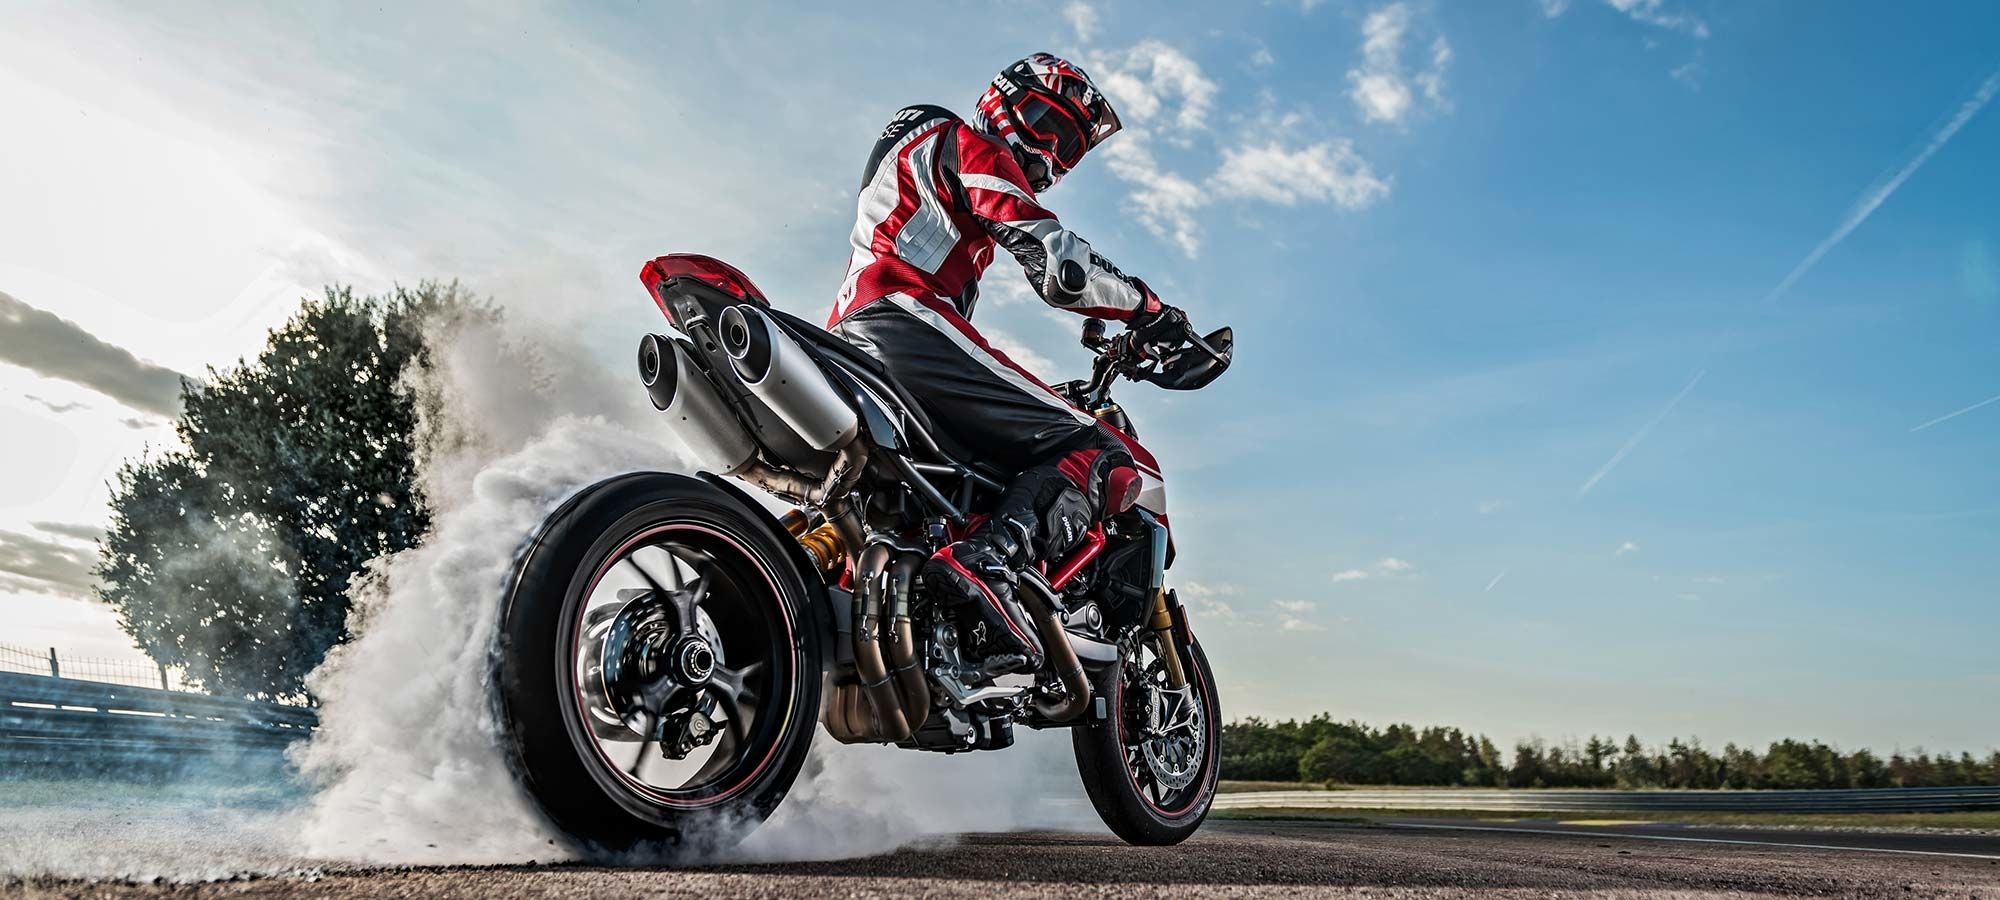 Ducati Hypermotard EICMA 2018